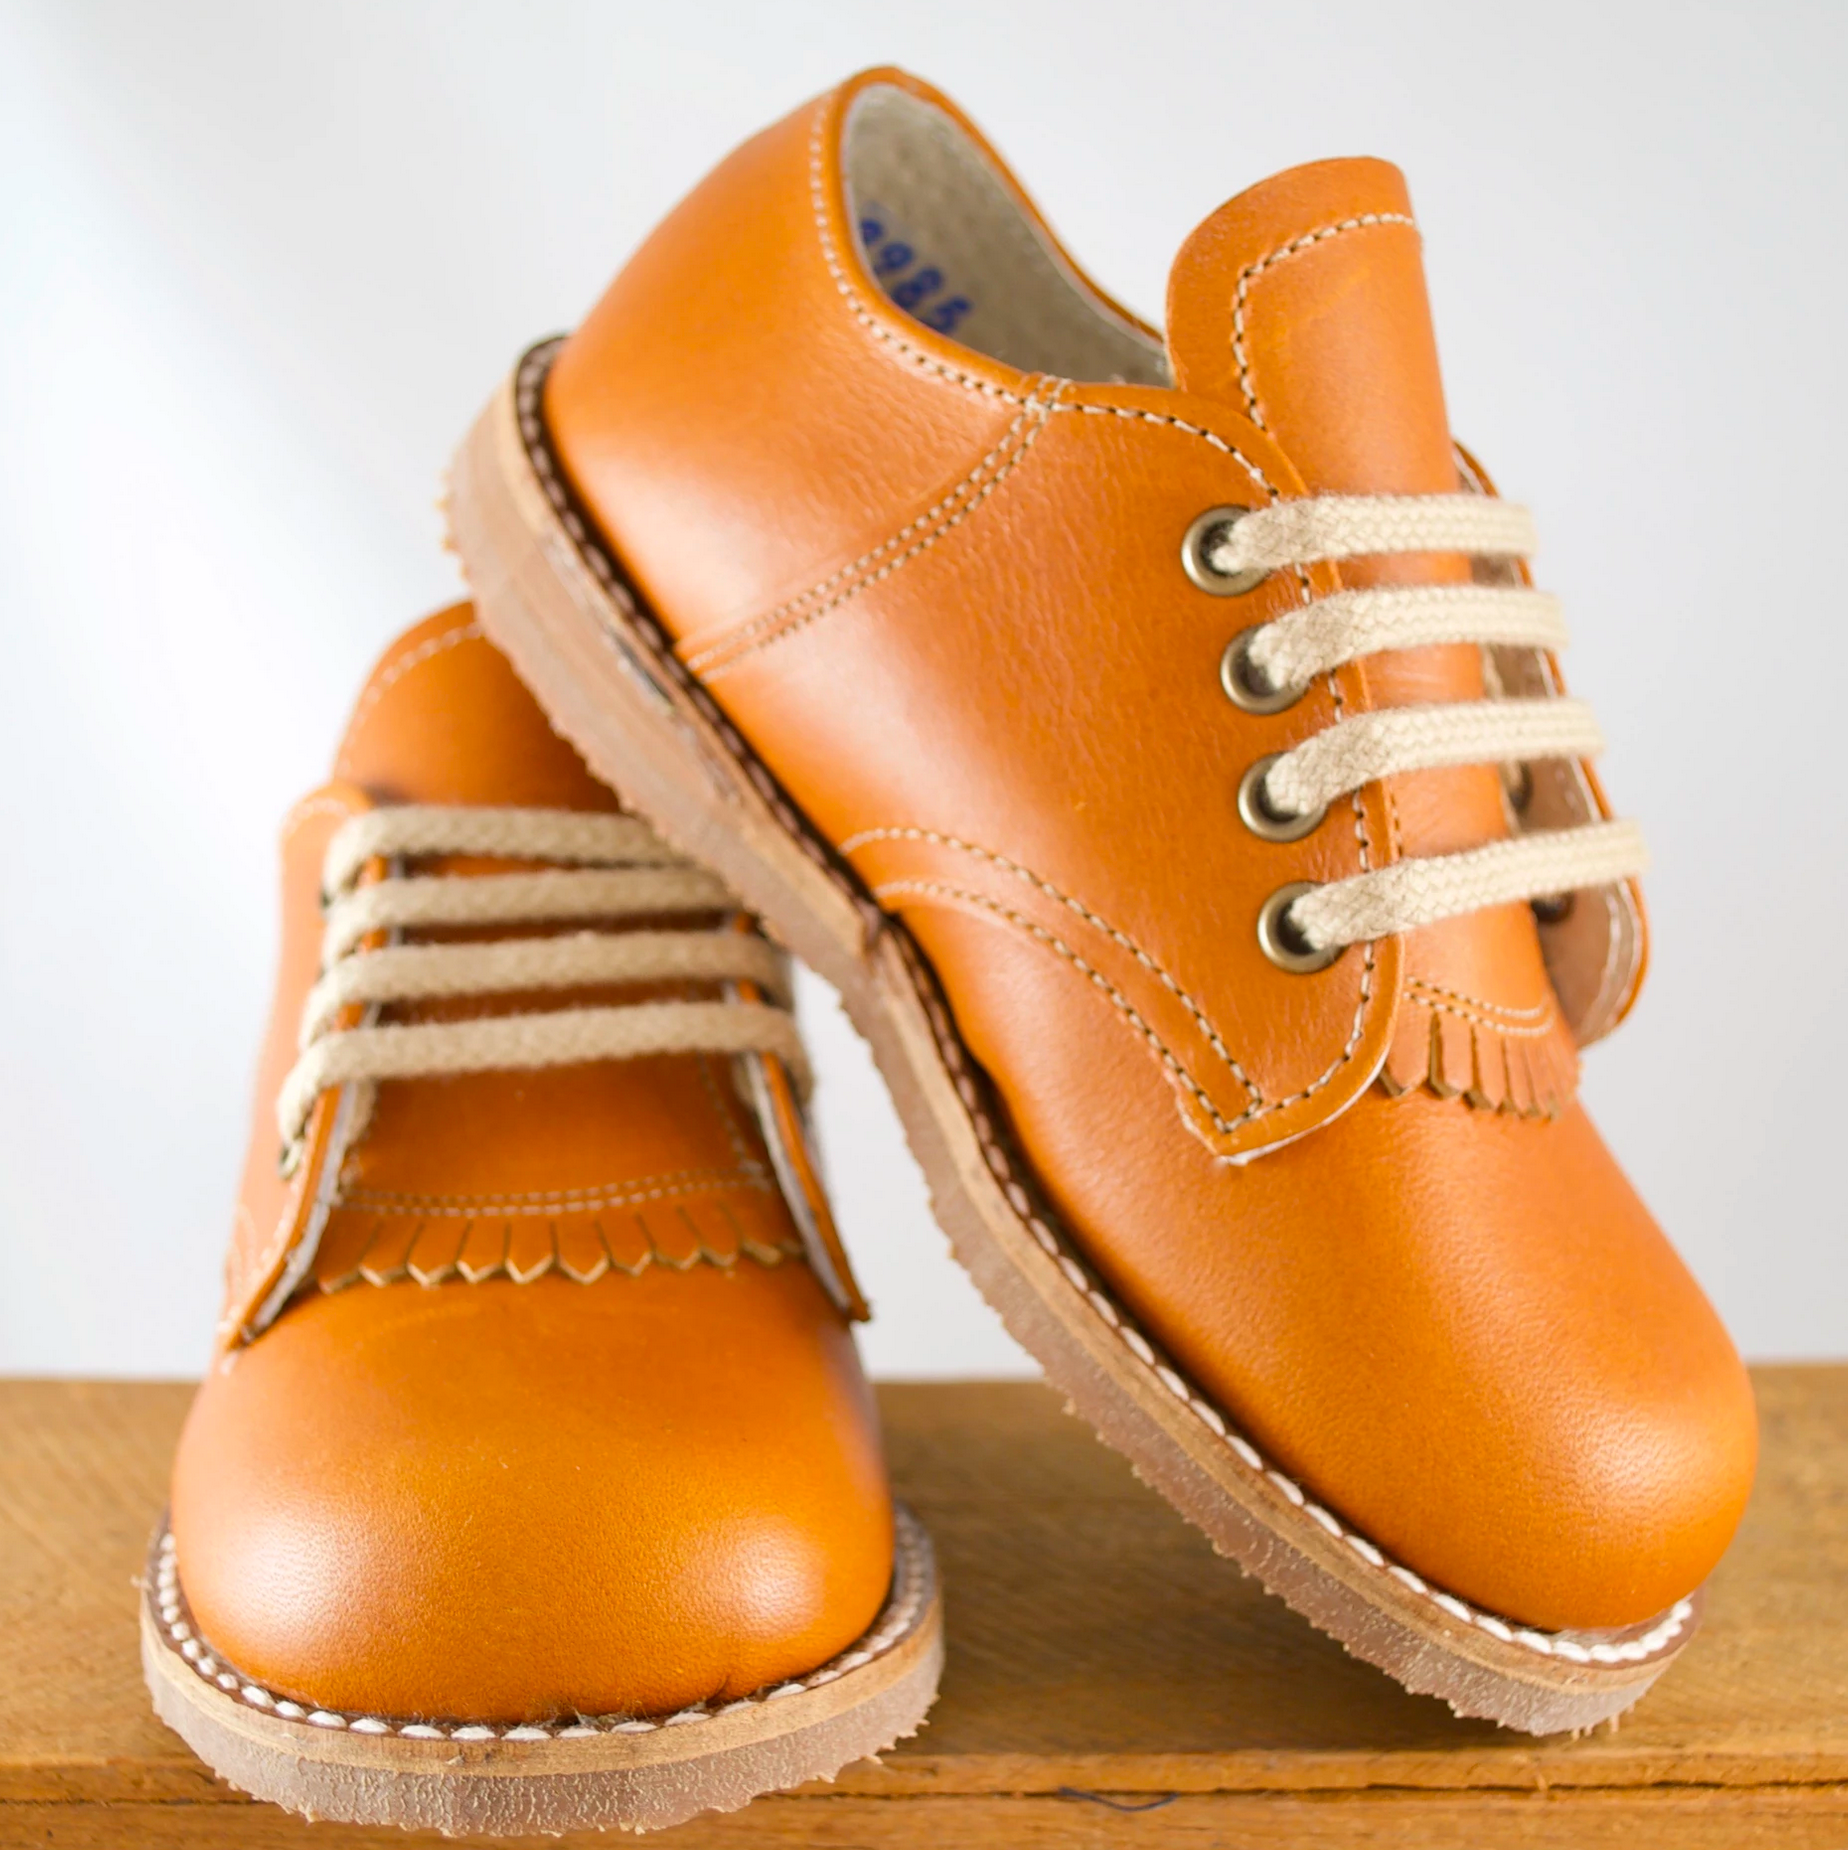 Zimmerman shoes artie saddle shoe in warm brown